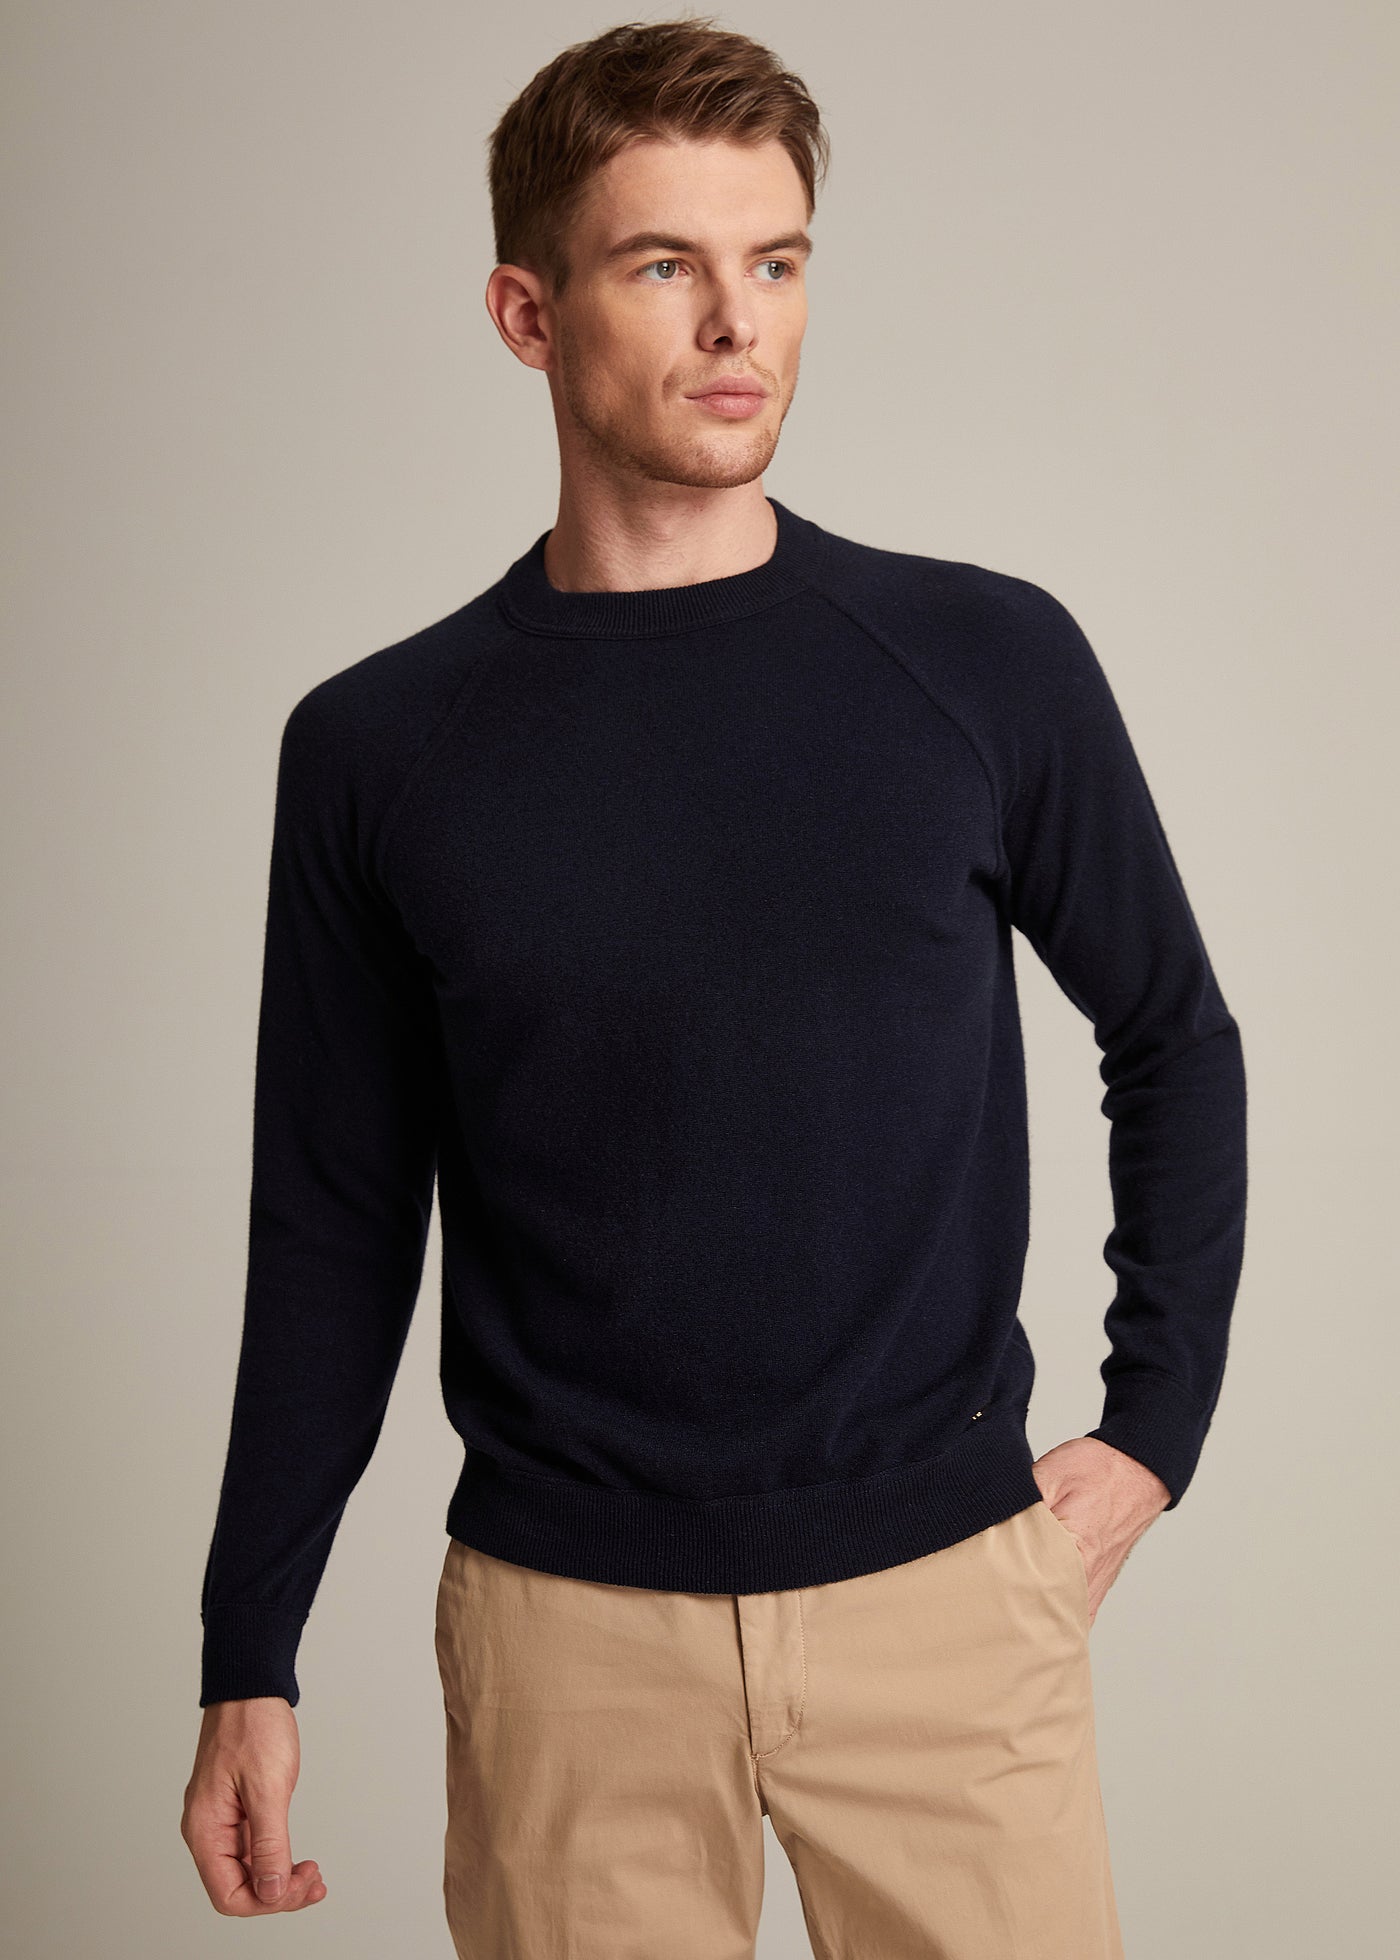 Round-neck Men's Cashmere Pullover